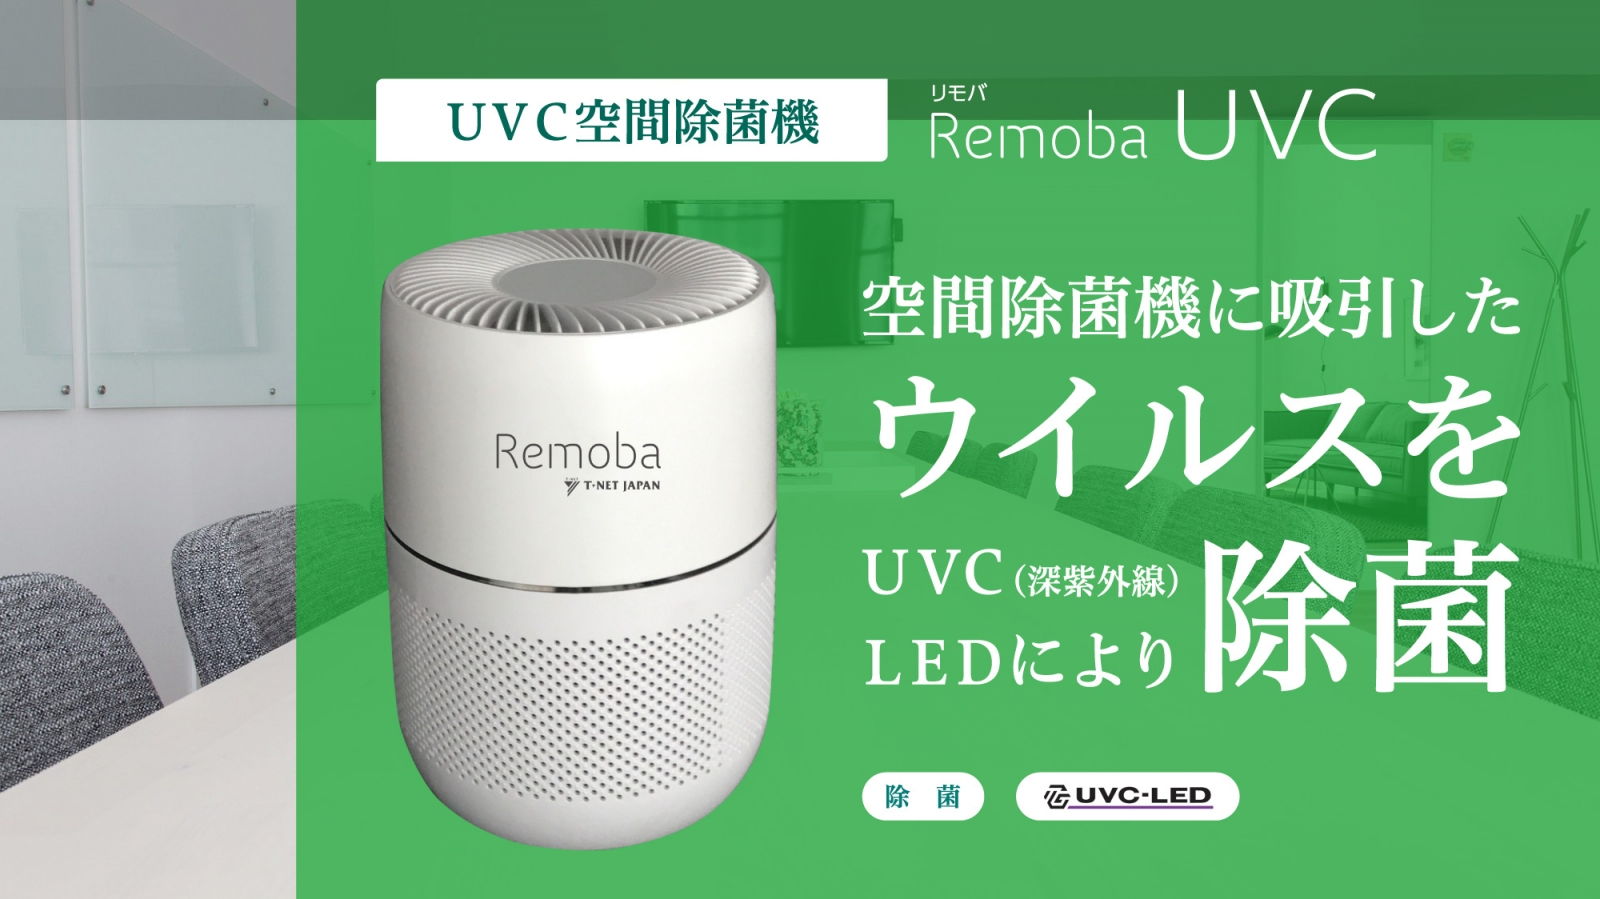 UVC(深紫外線)空間除菌機「Remoba UVC」を発売開始しました 